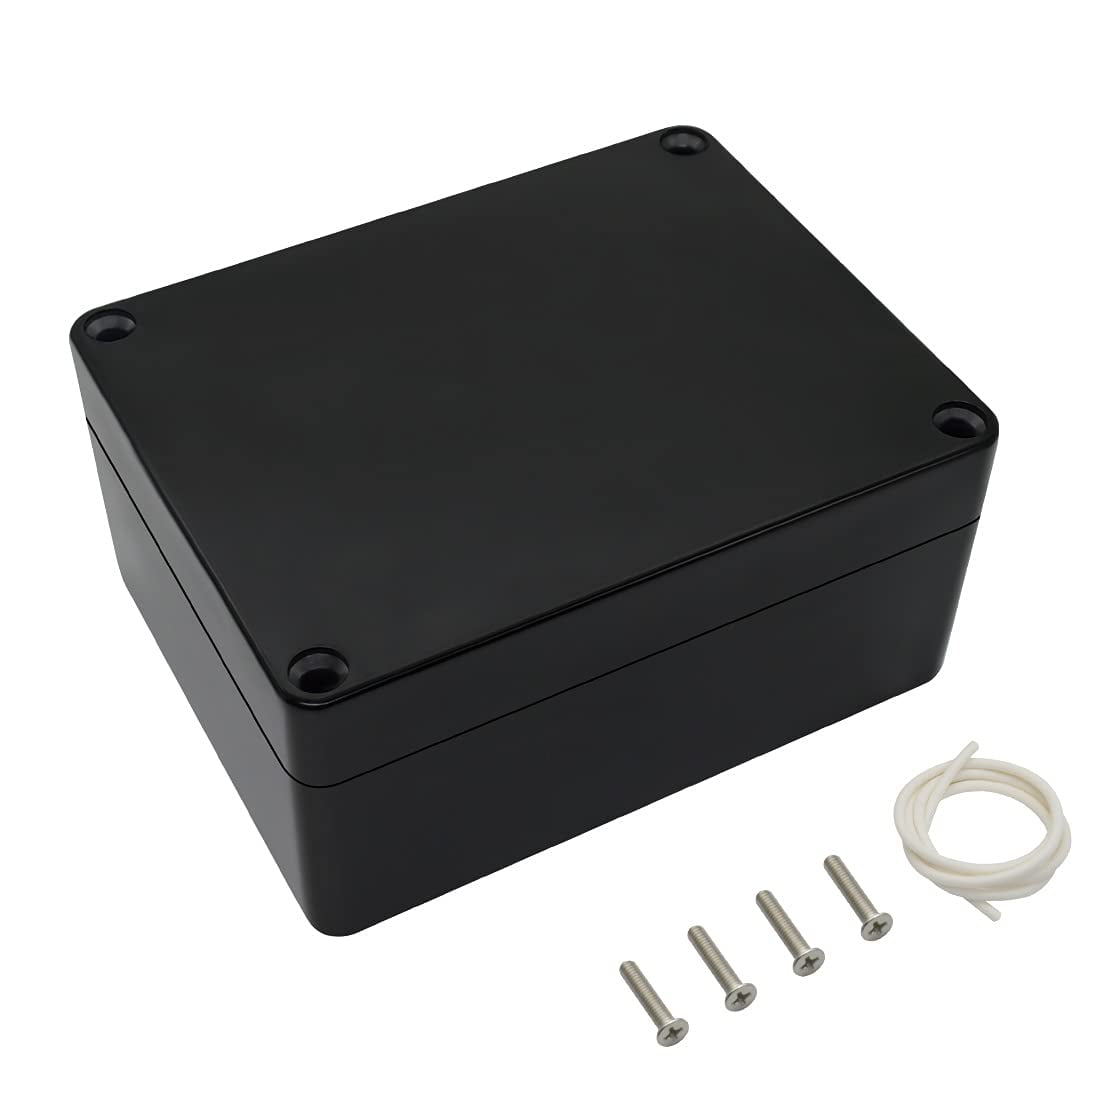 -S-. Full Black Desktop Instrumentation Project Enclosure Box Case ABS 